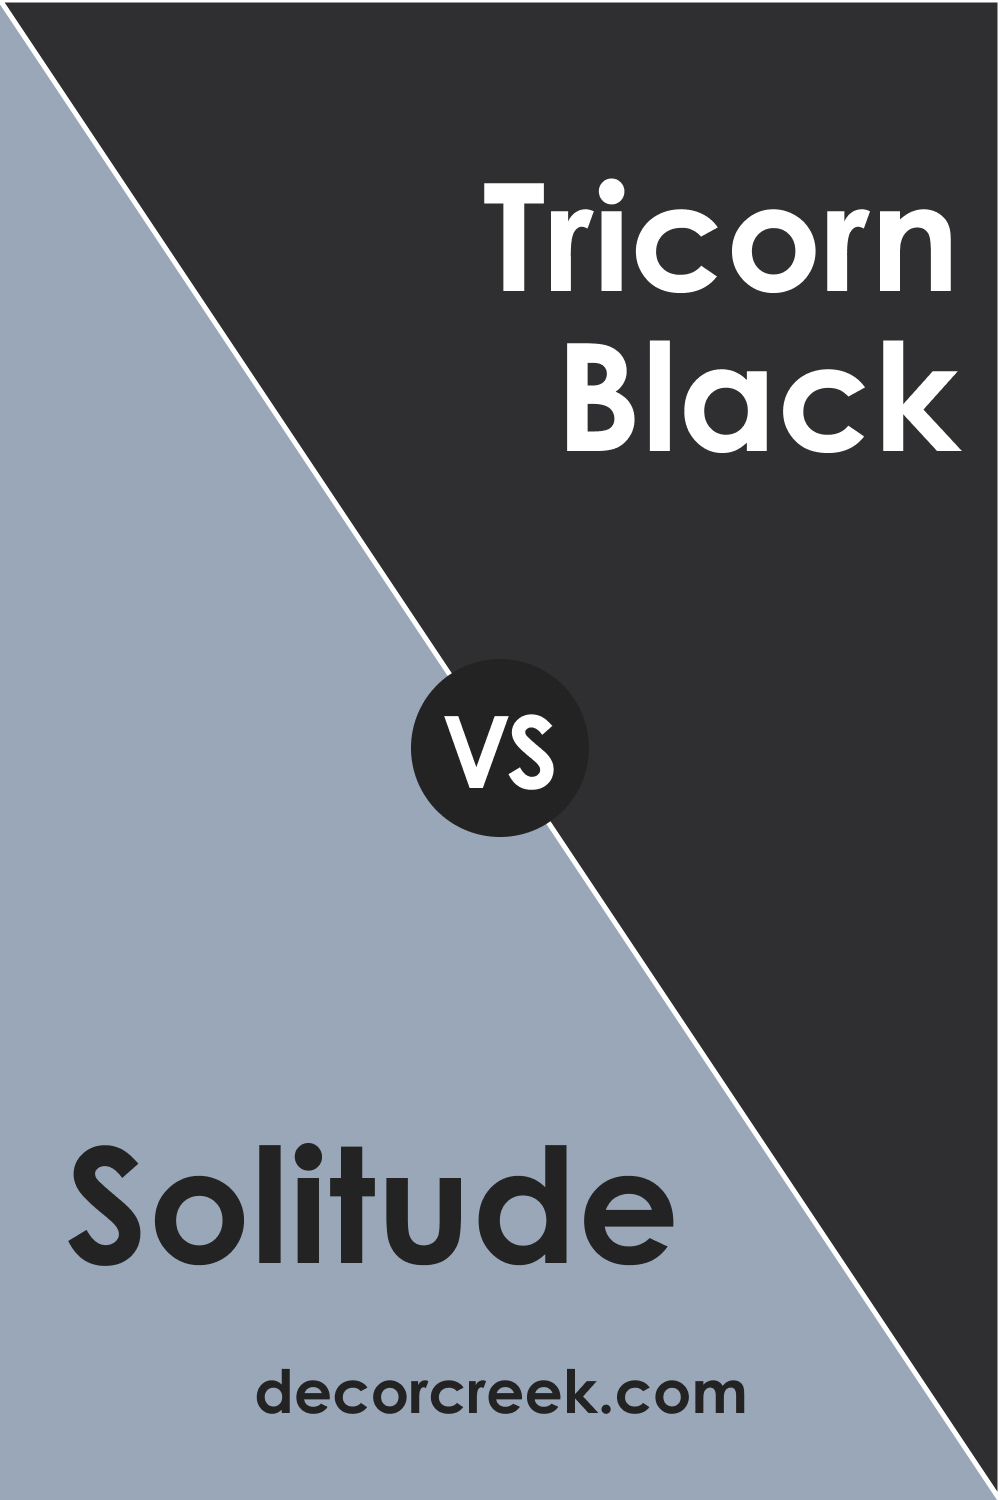 SW 6535 Solitude vs. SW 6258 Tricorn Black